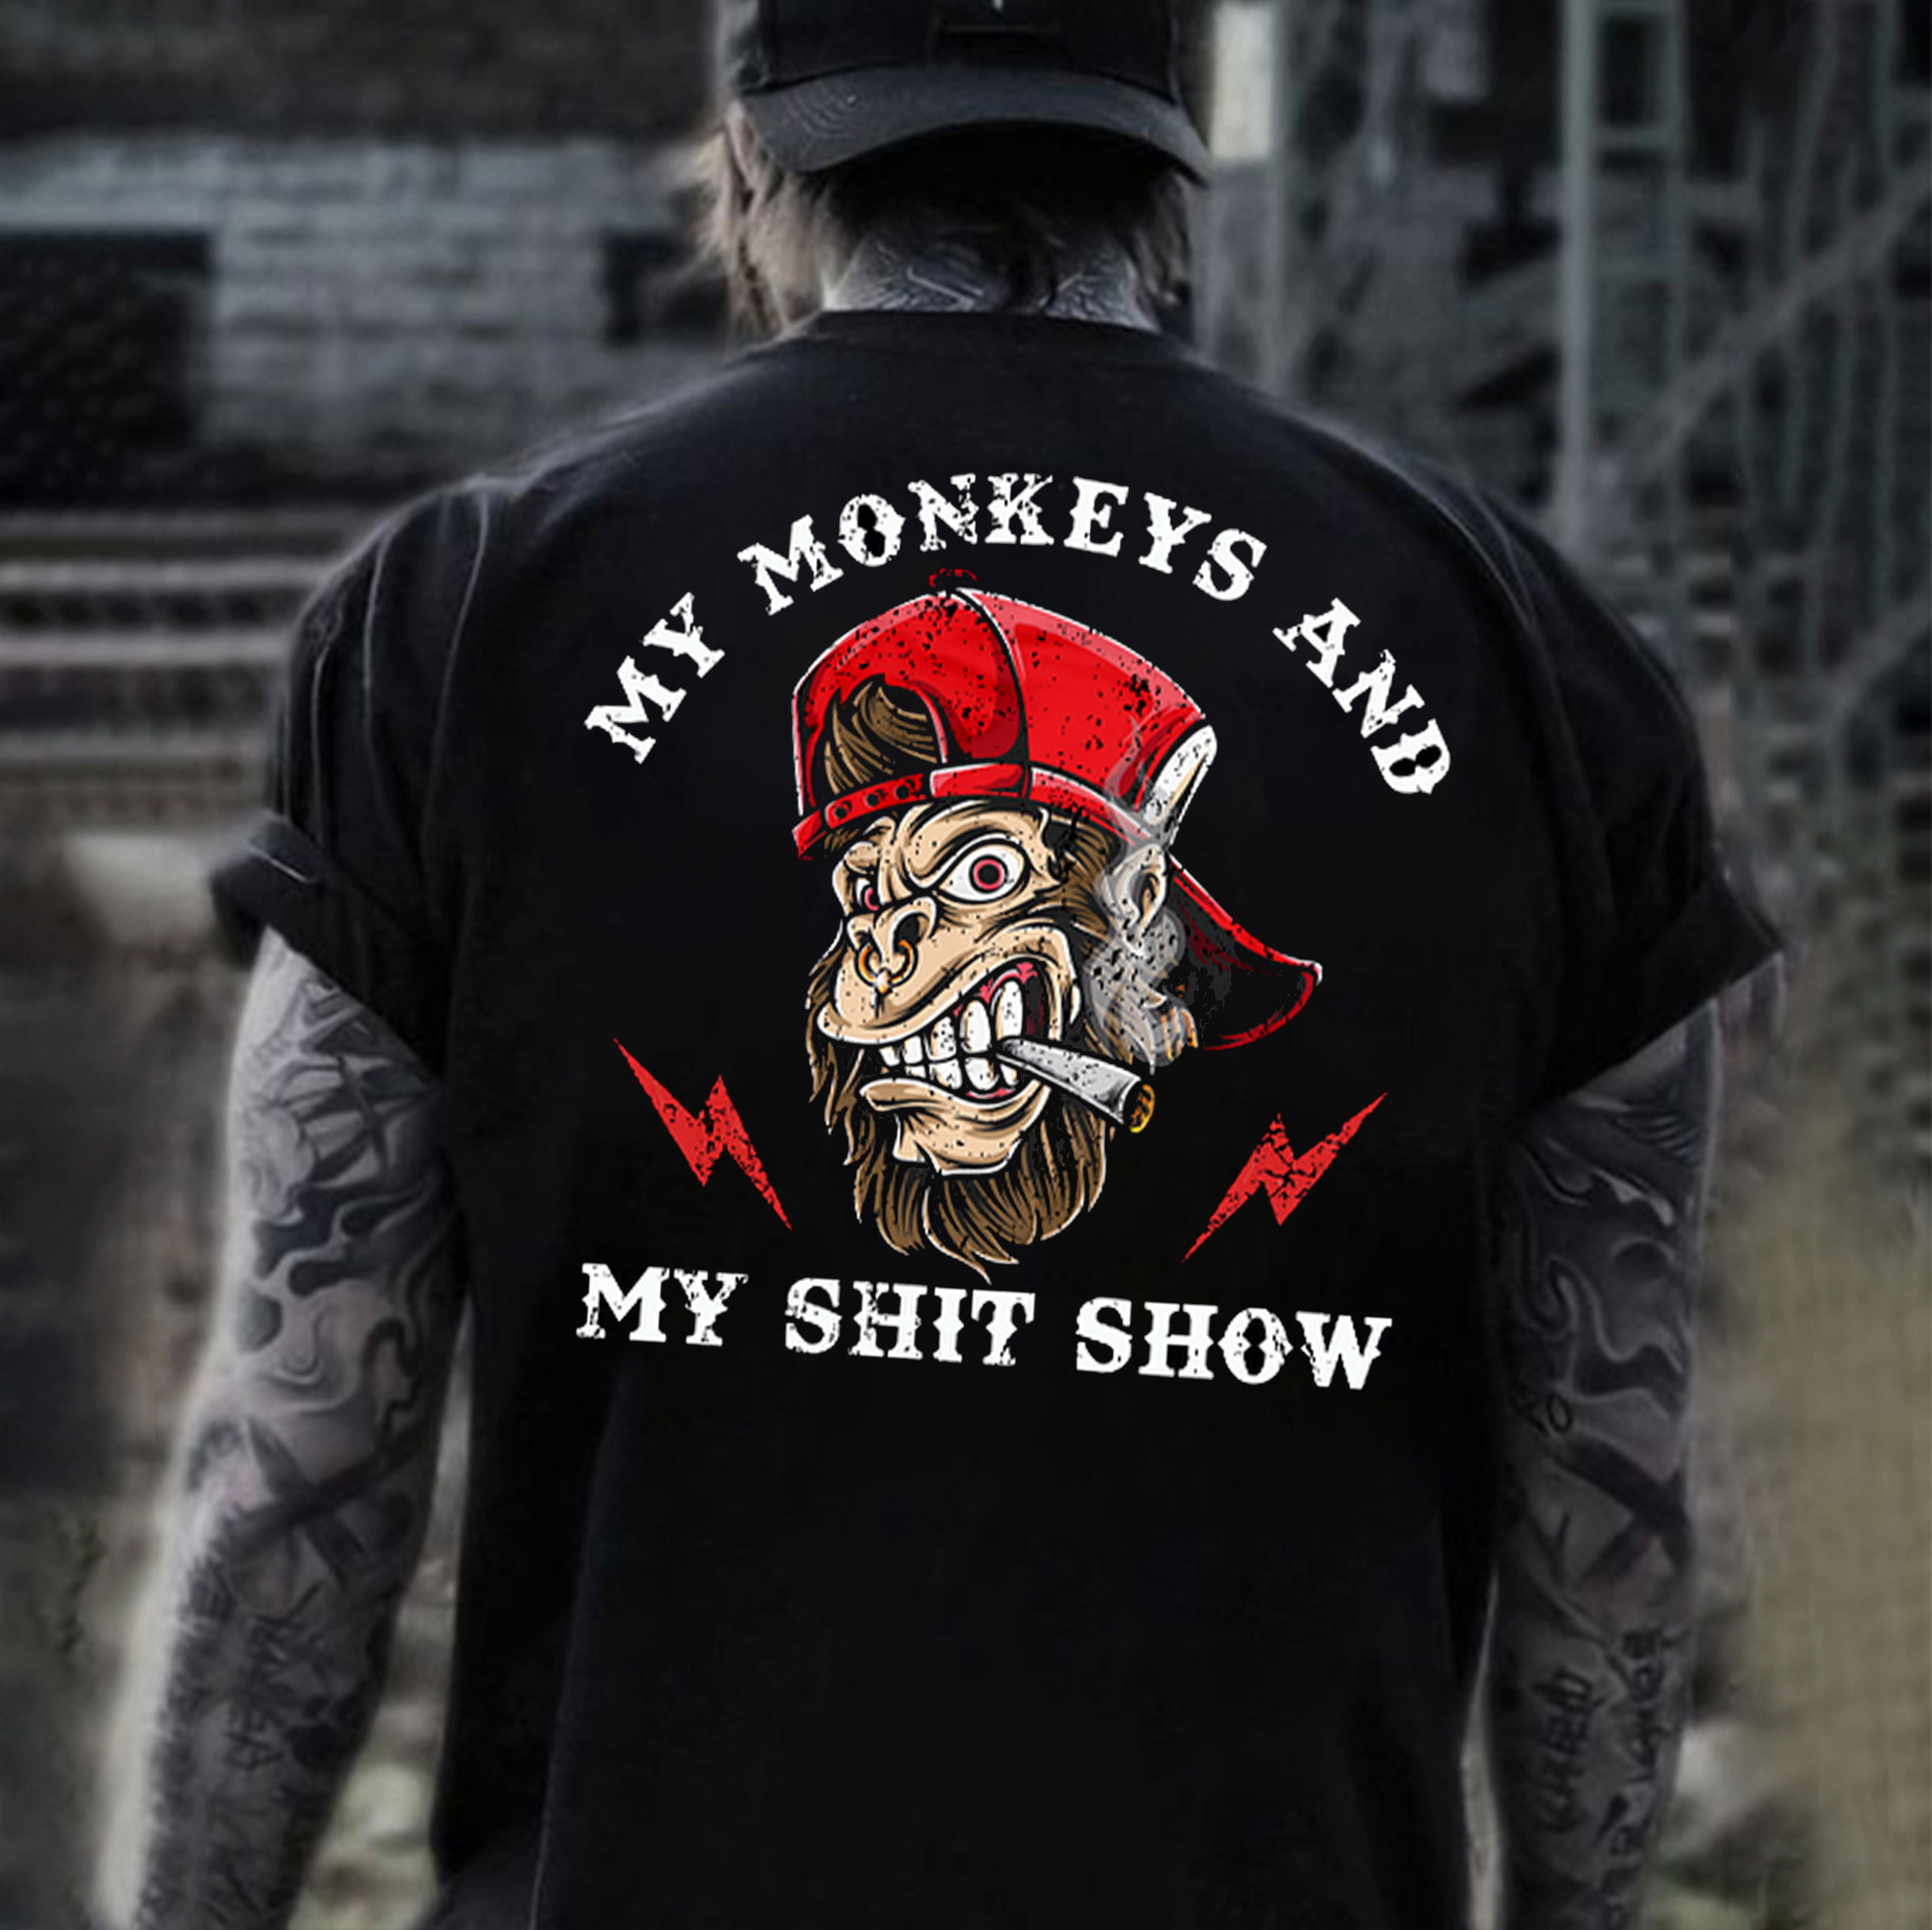 MY MONKEYS AND MY SHIT SHOW Print T-Shirt